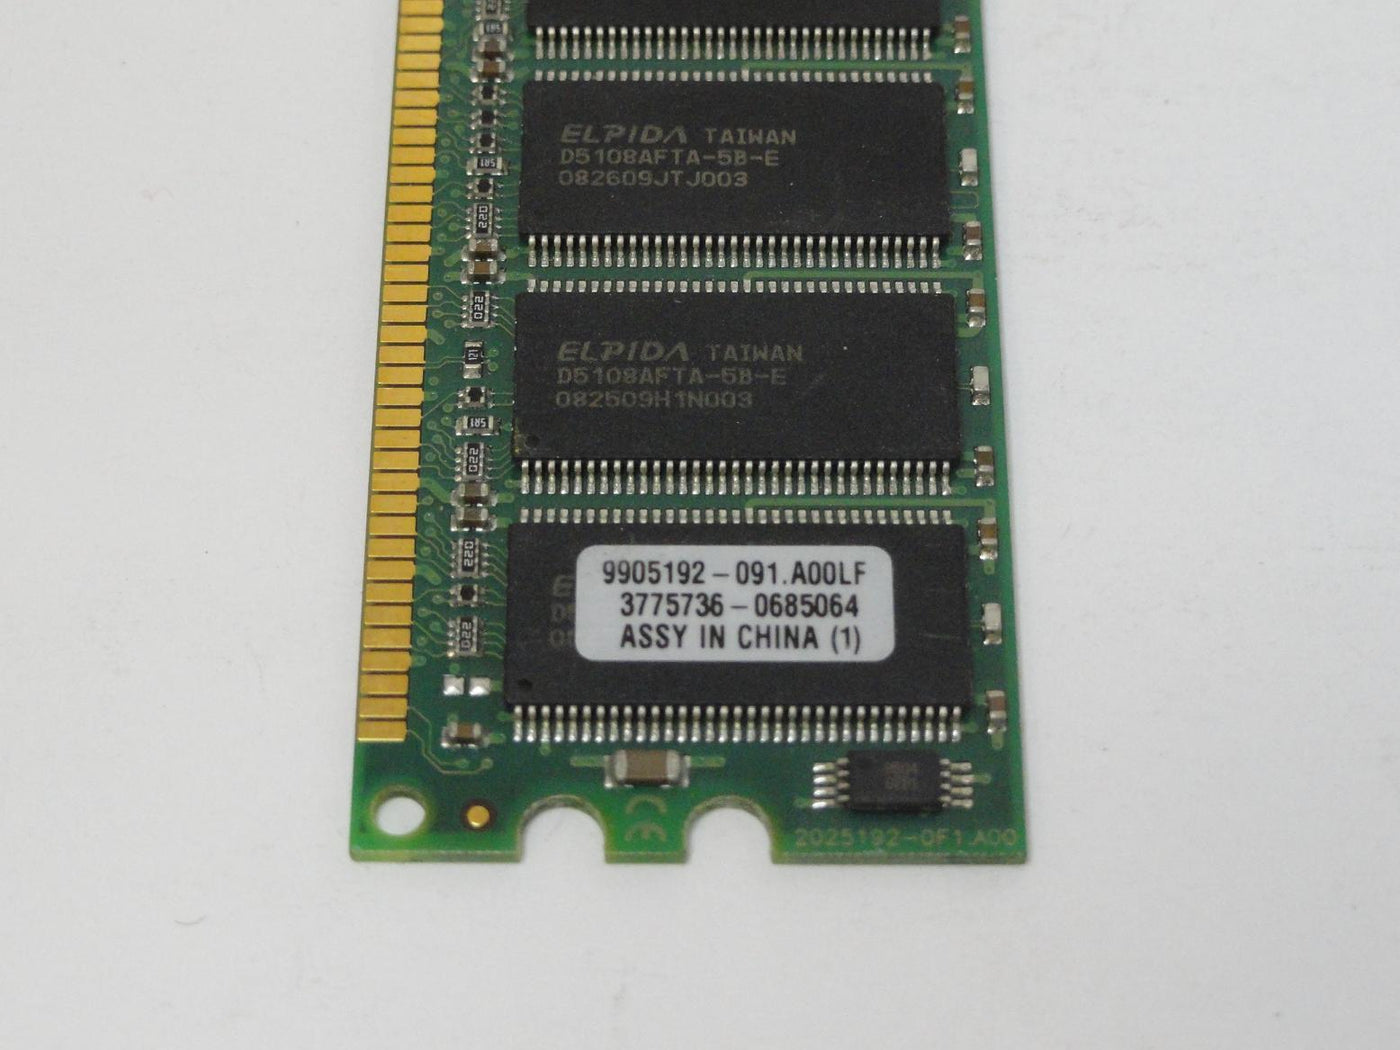 PR25362_9905192-091.A00LF_Kingston 512MB PC3200 DDR-400MHz DIMM RAM - Image3